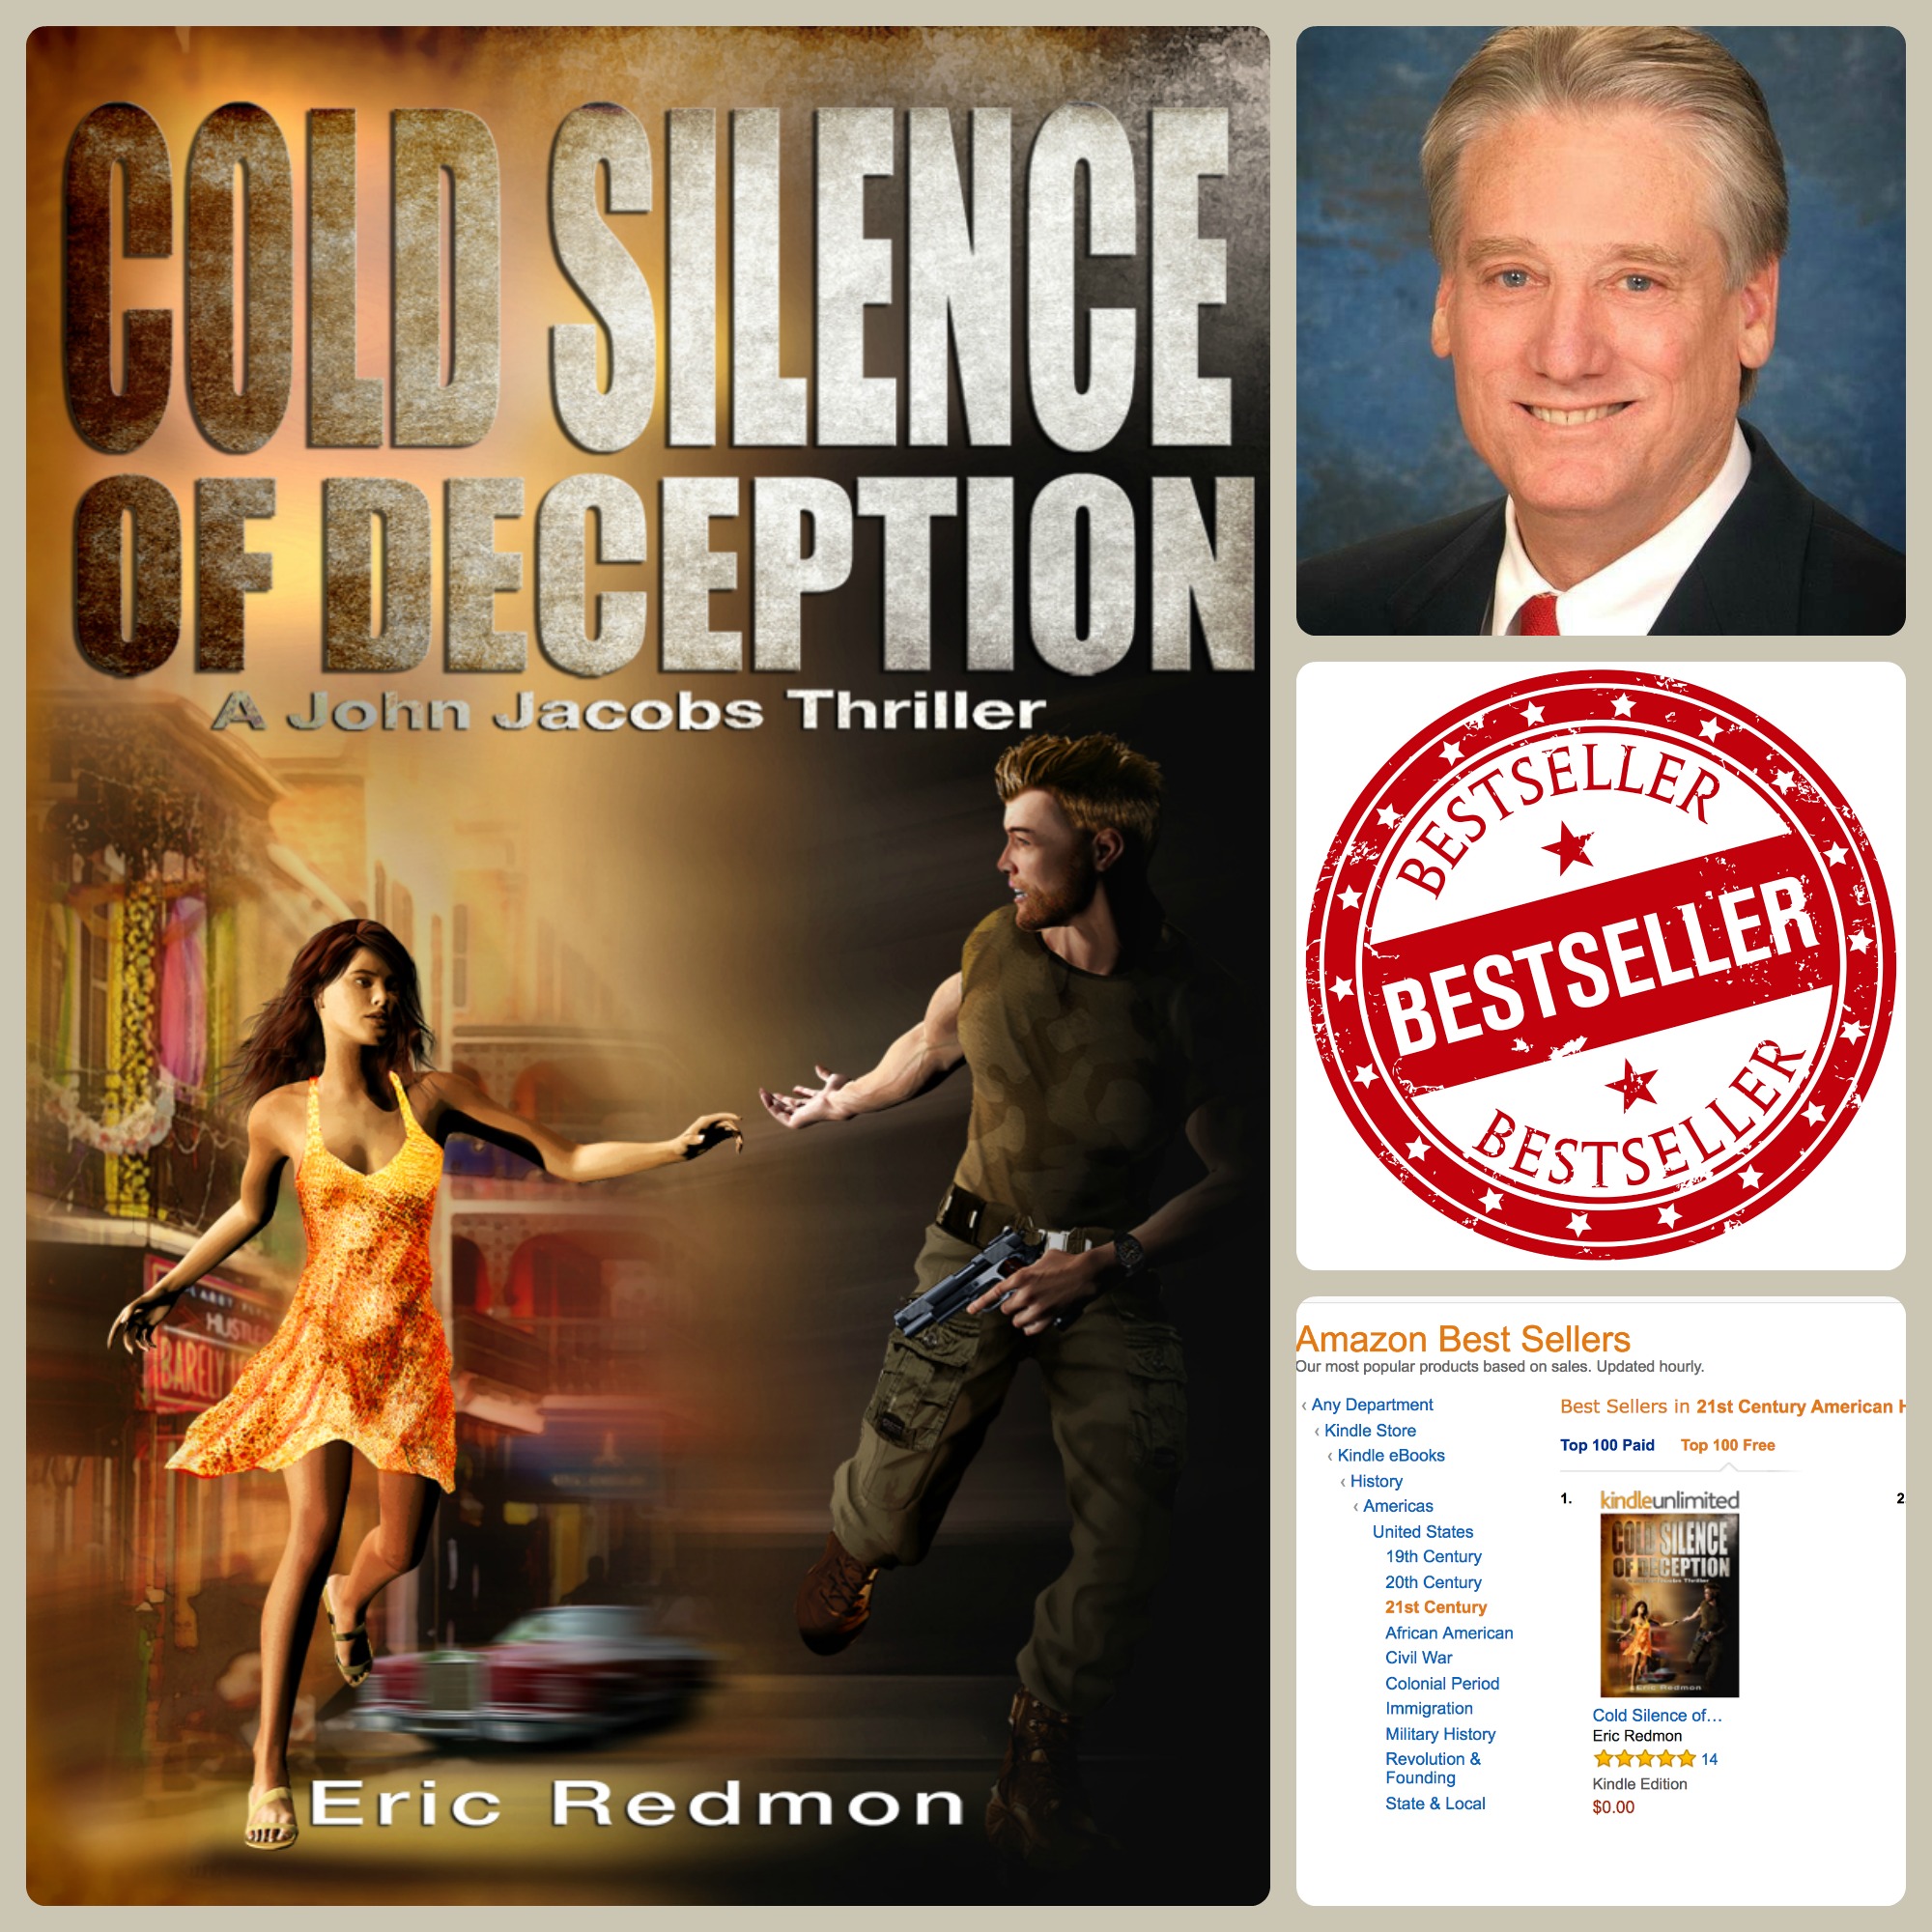 eric redmon bestselling author